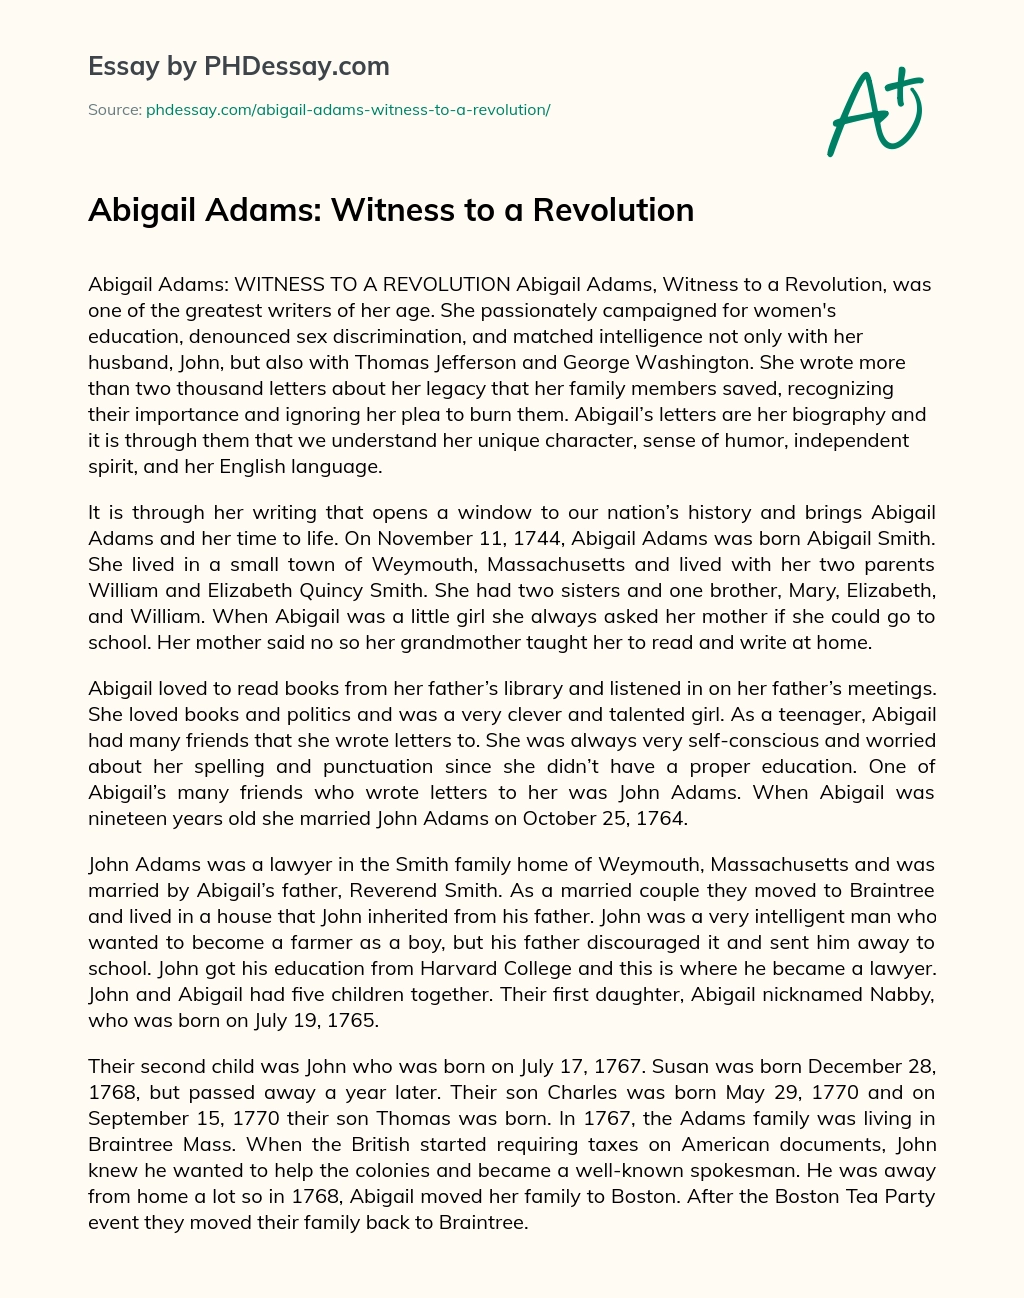 Abigail Adams: Witness to a Revolution essay